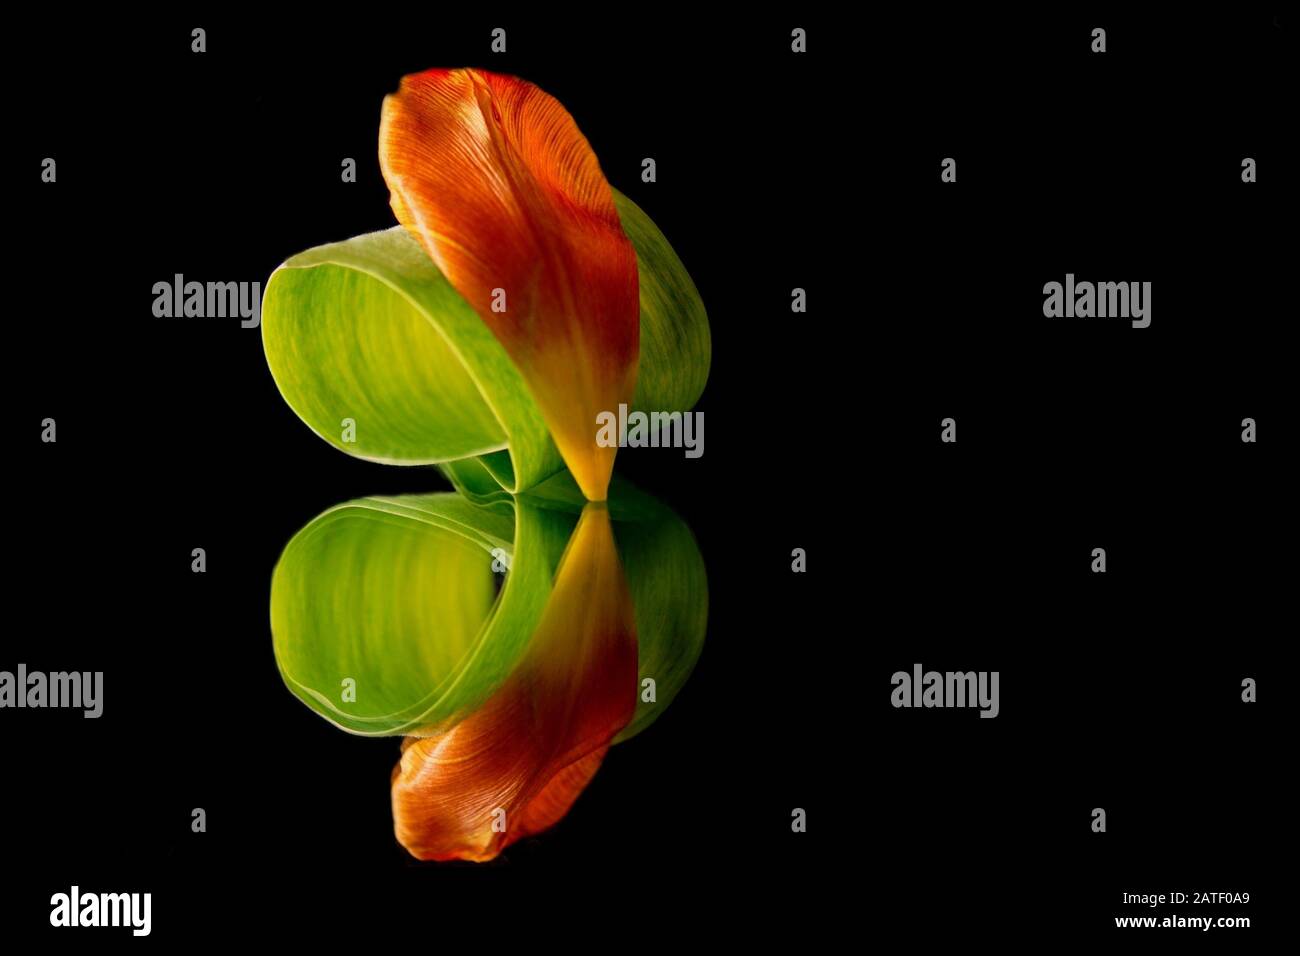 Tulip my vision - Orange tulip petal and leaf on a mirror black background Stock Photo